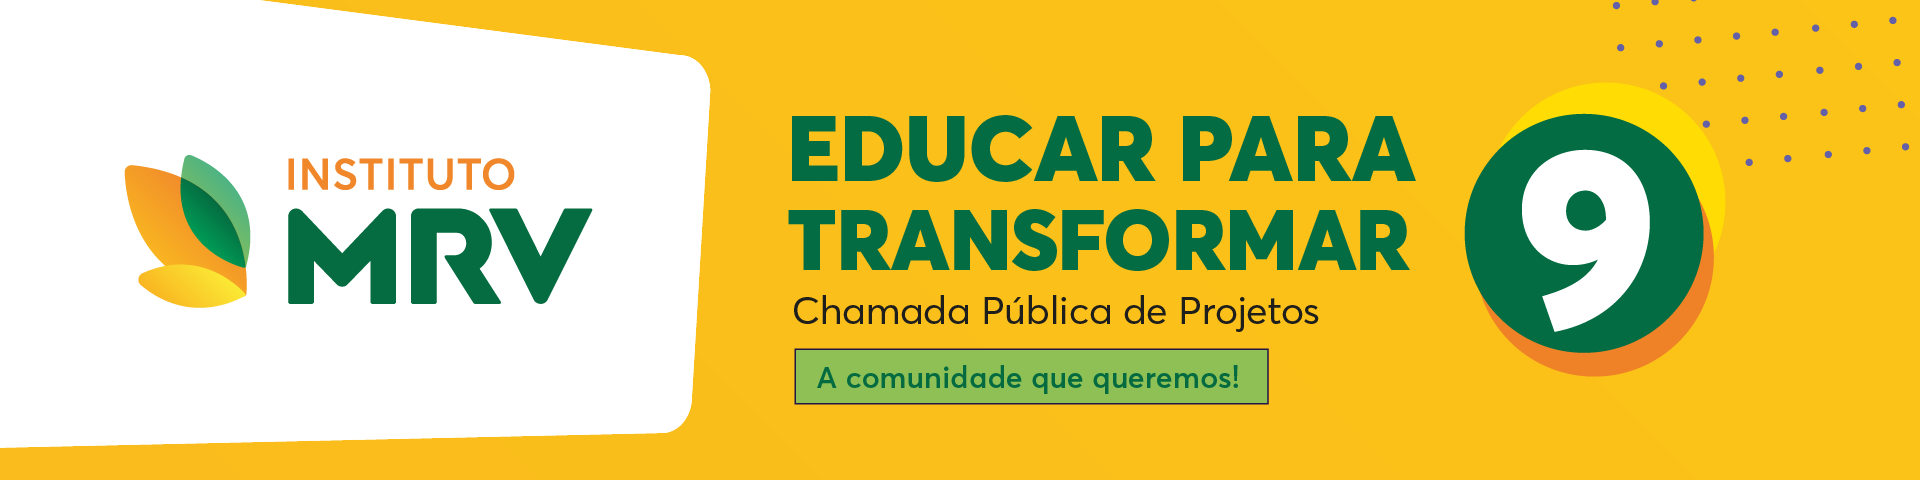 Banner Edital Educar para Transformar 9 edicao